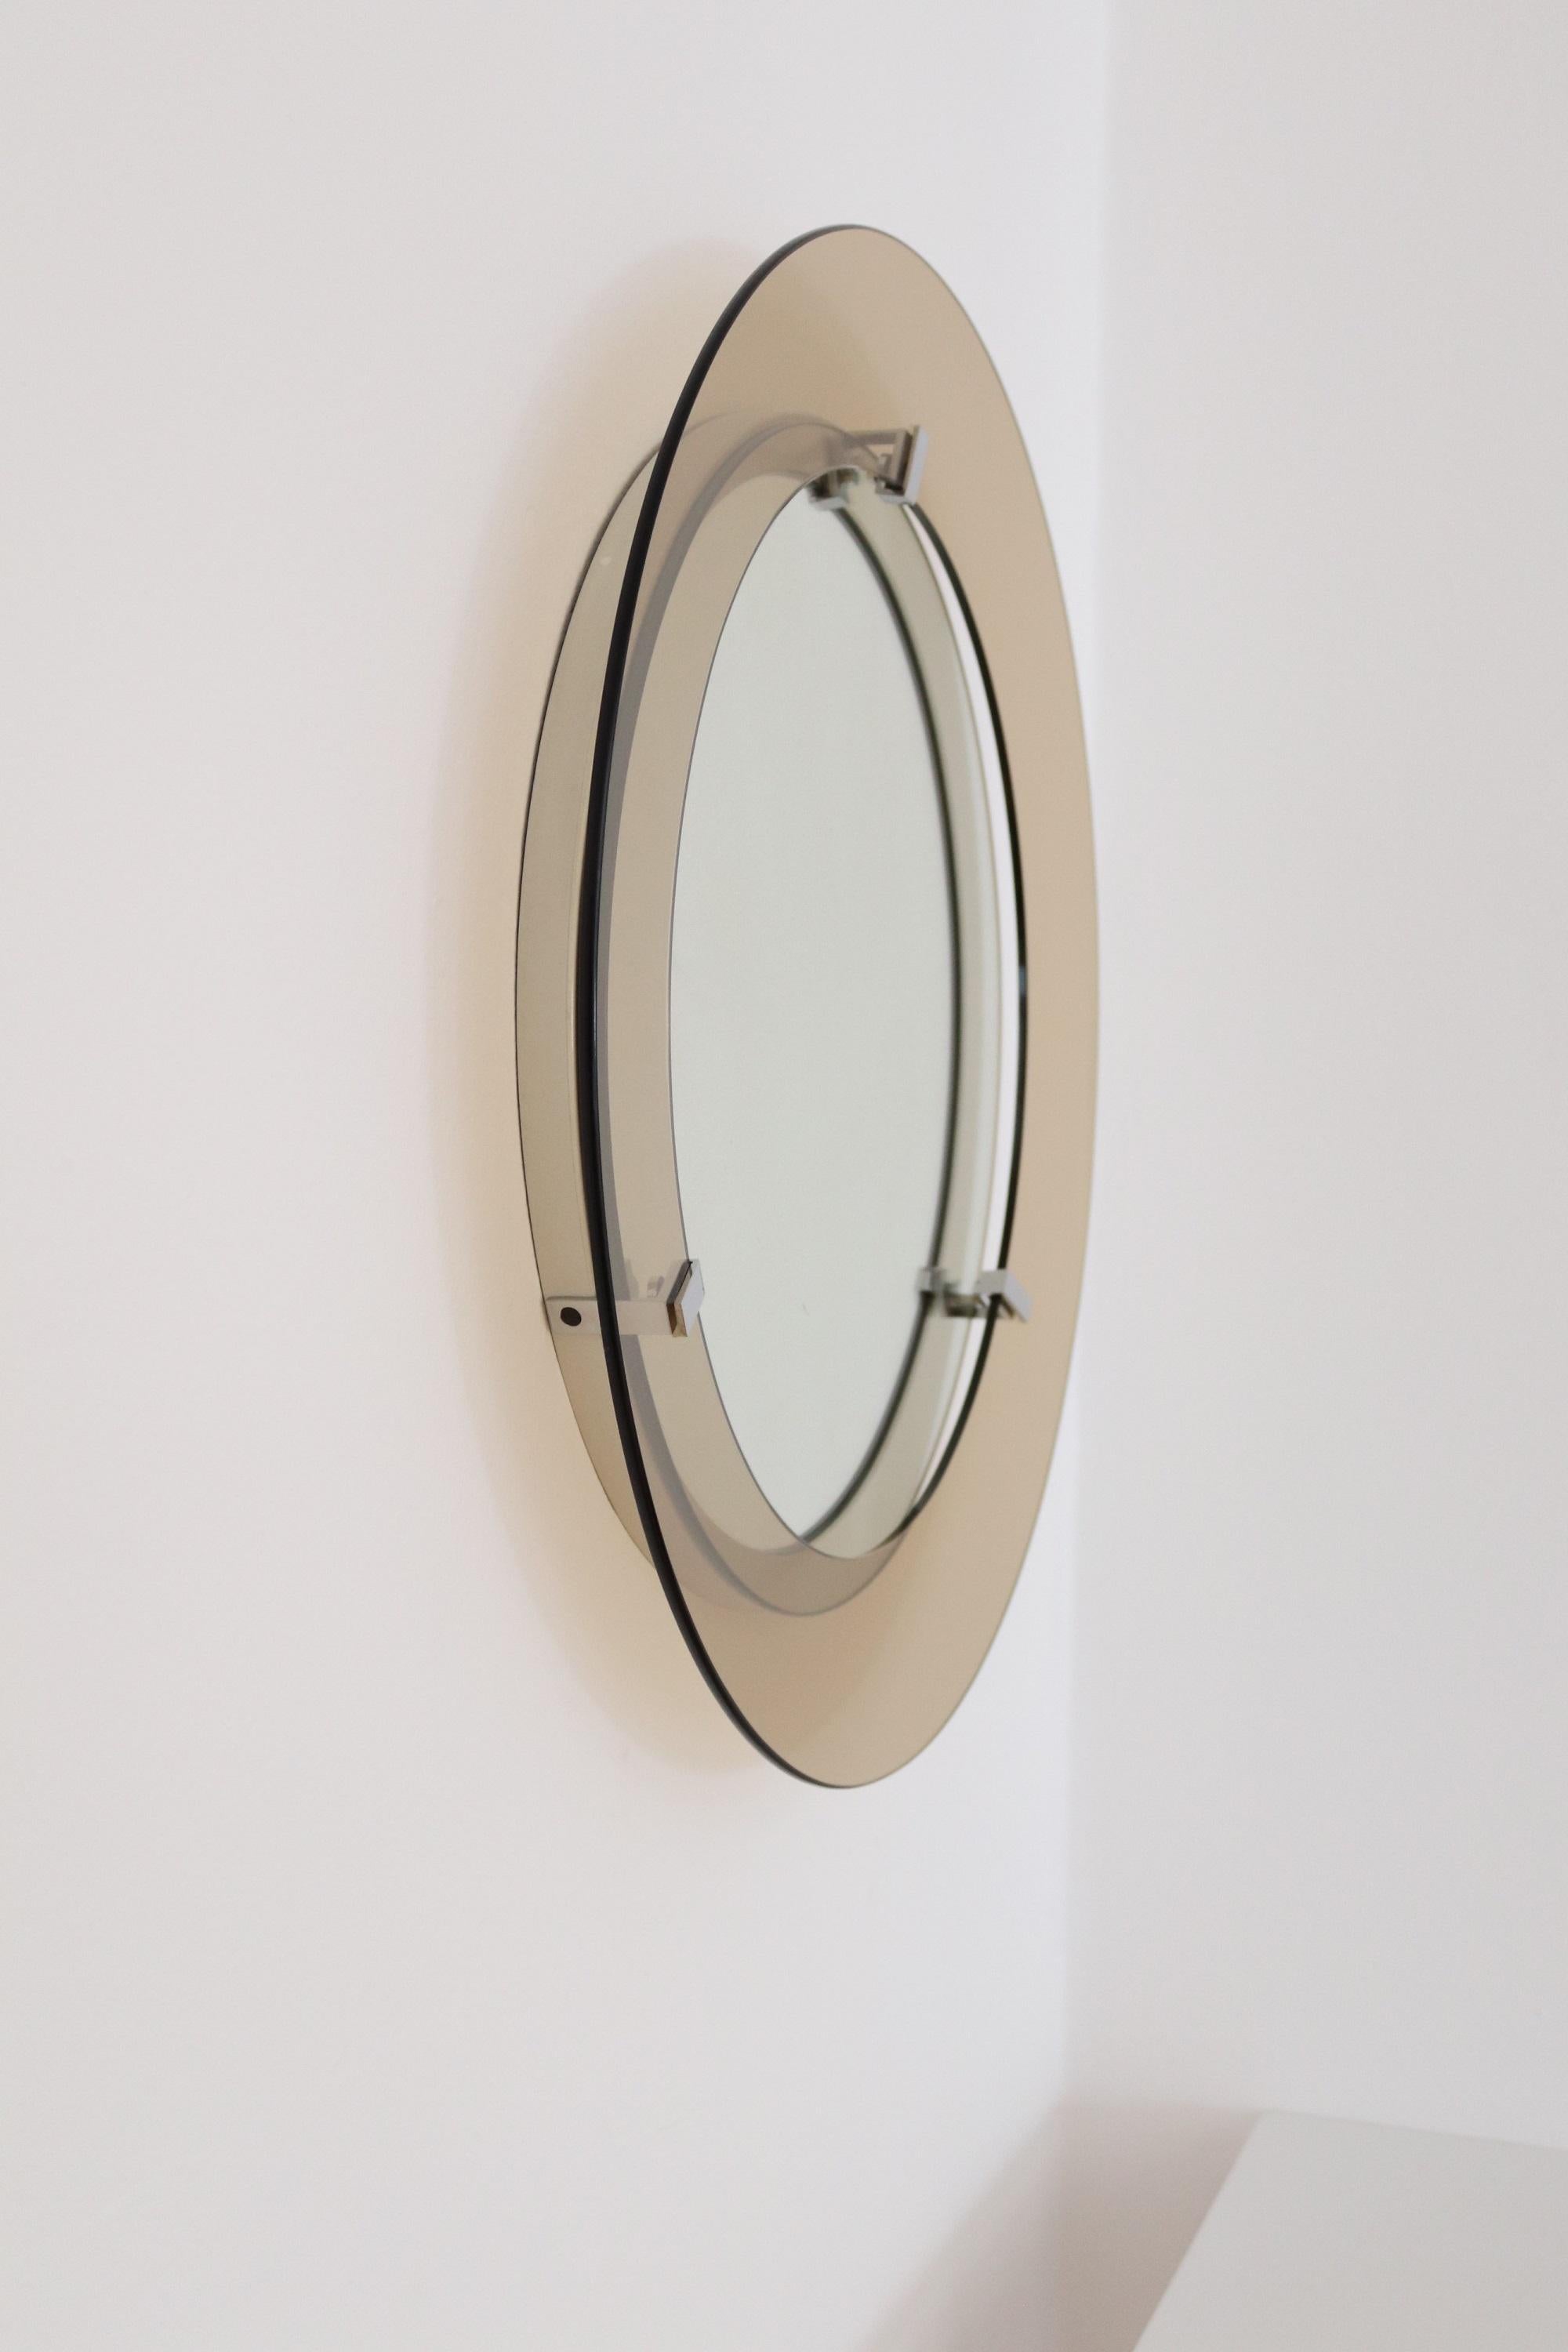 Glass Italian Midcentury Wall Mirror by Veca, 1970s